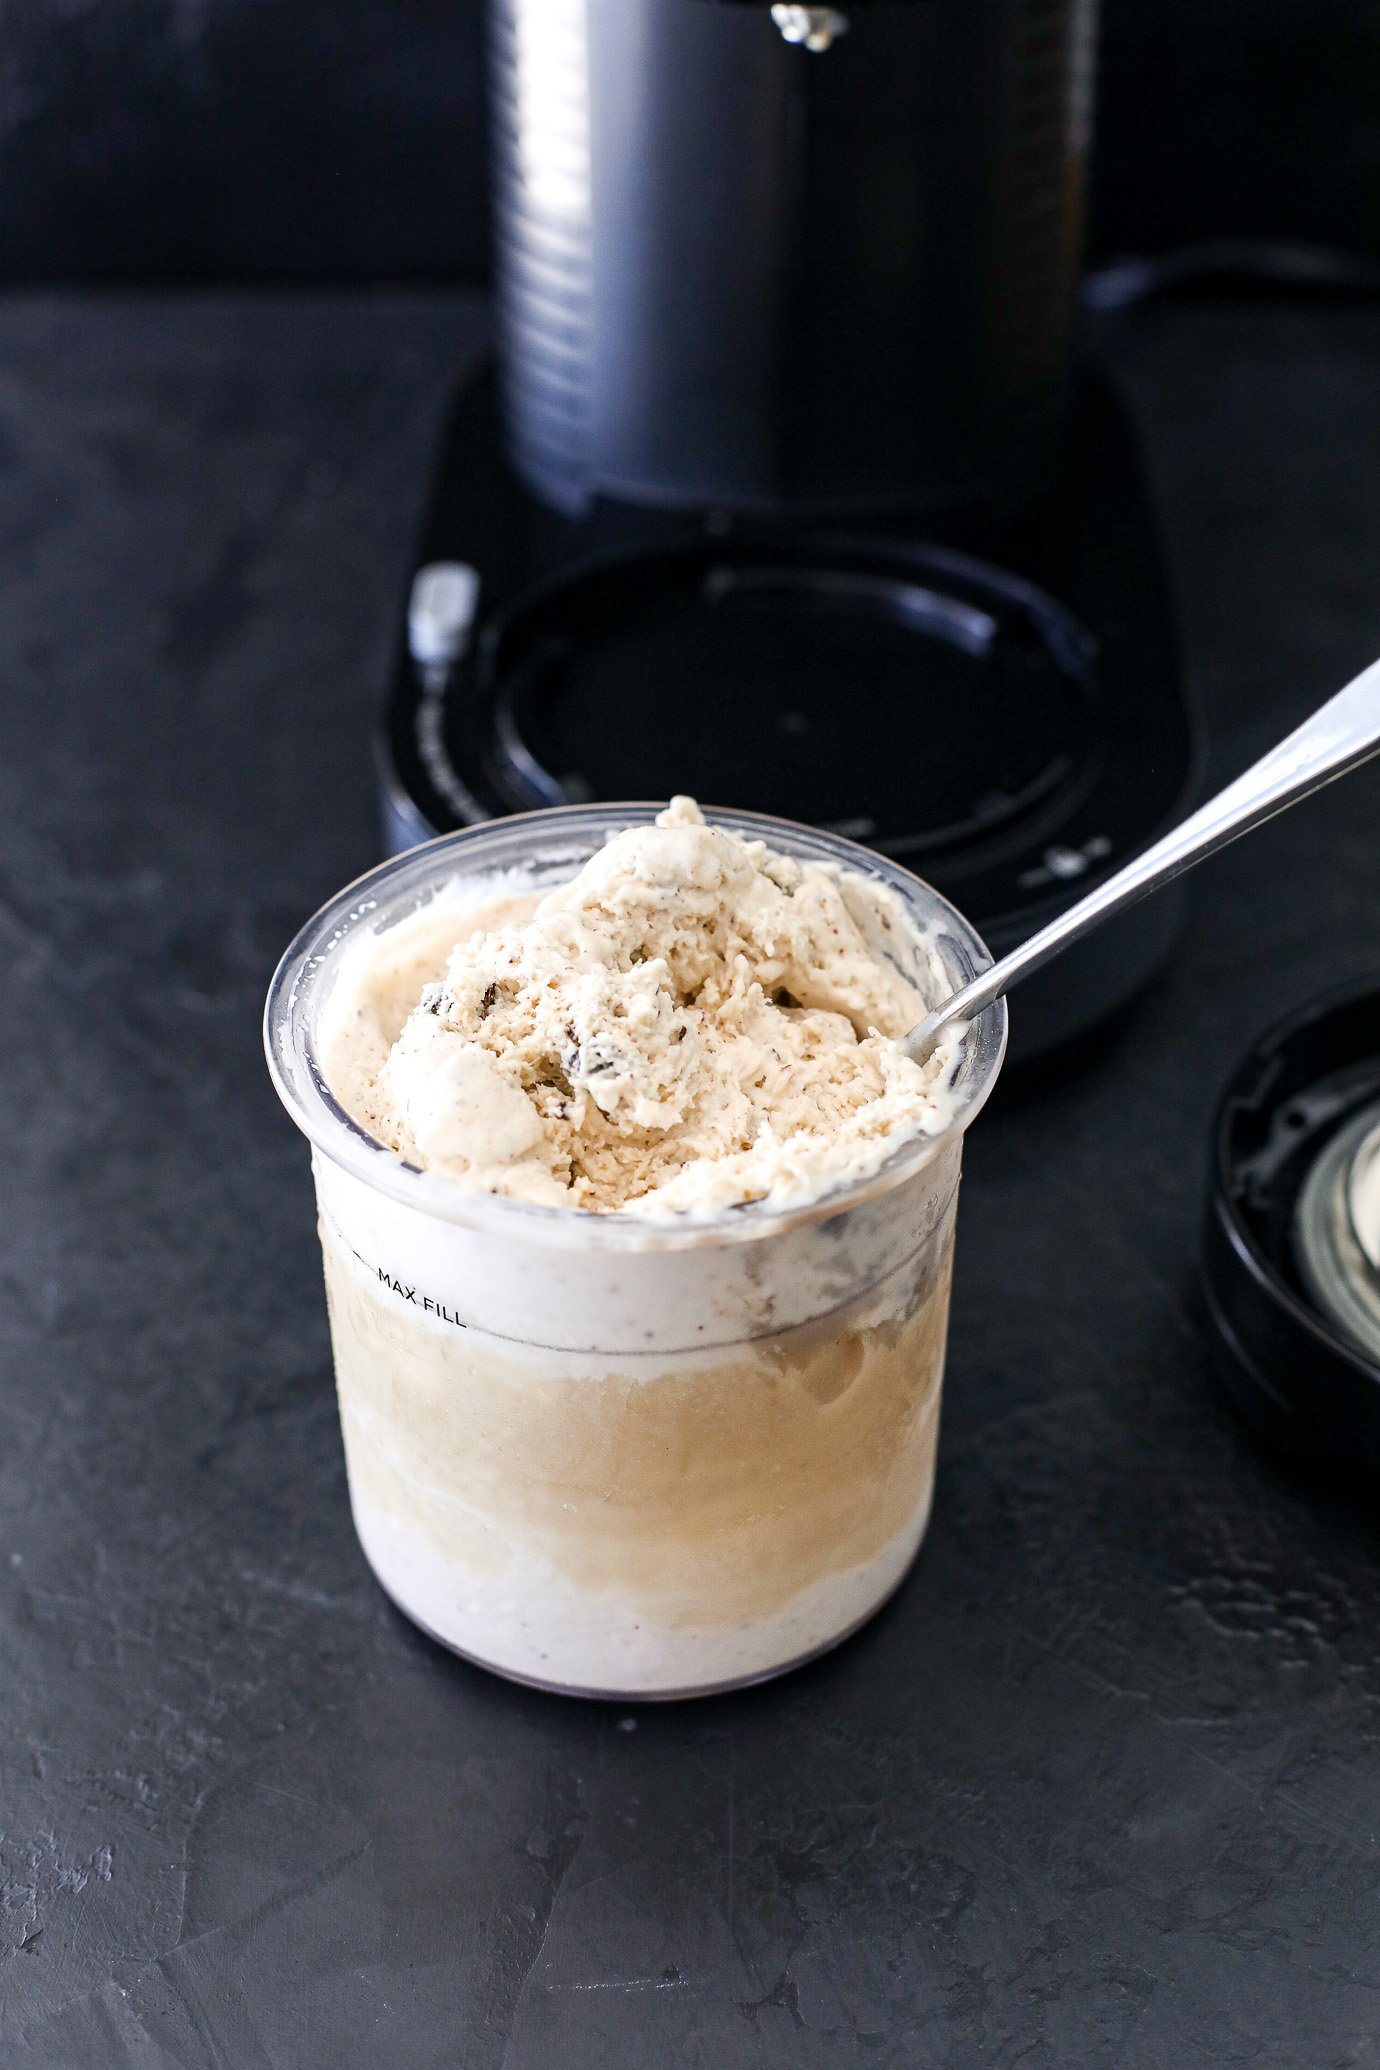 Ninja Creami Protein Ice Cream - I Dream of Ice Cream